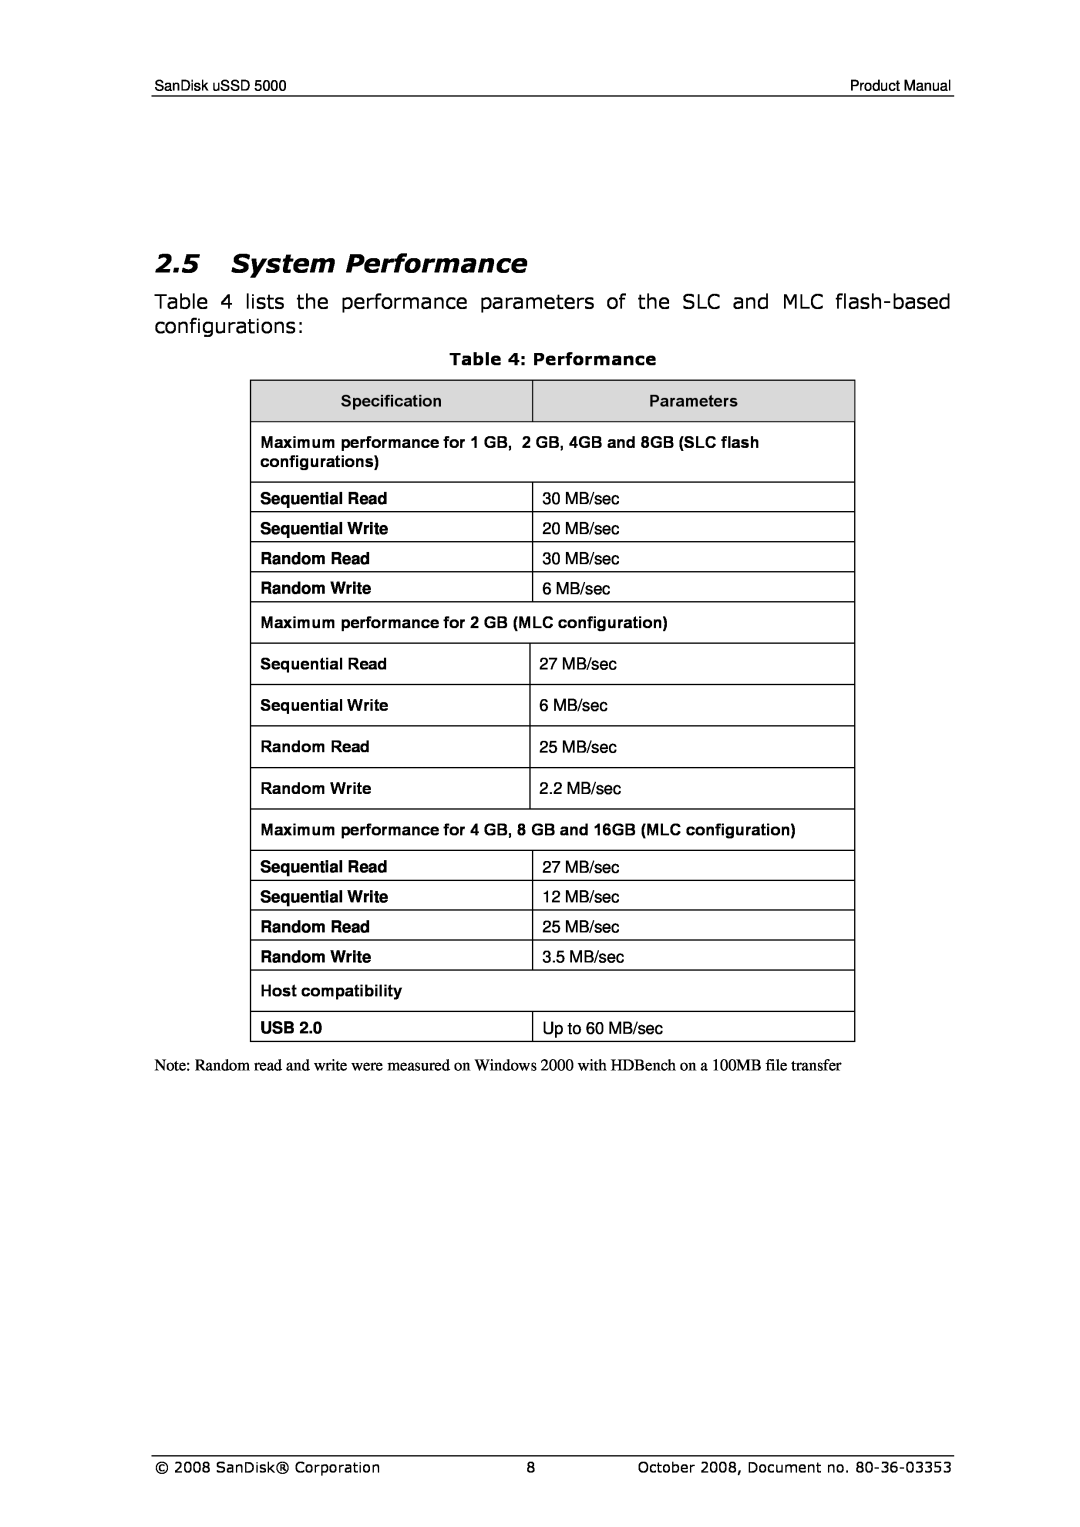 SanDisk 80-36-03353 manual System Performance 